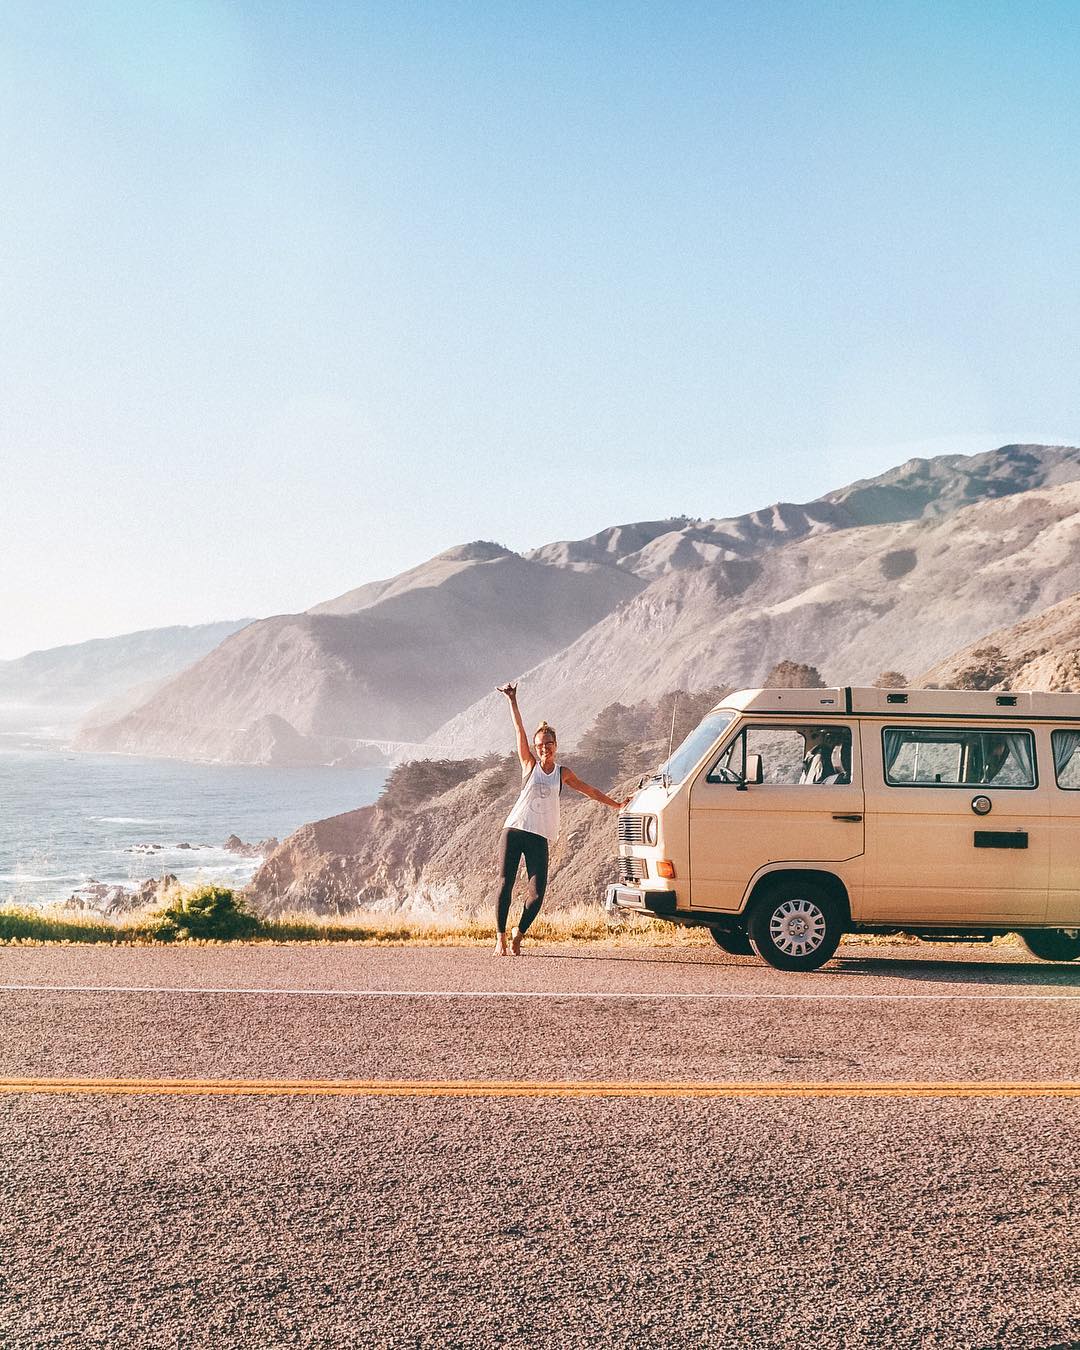 Sarah backpacking in California with a VW Kombi van.